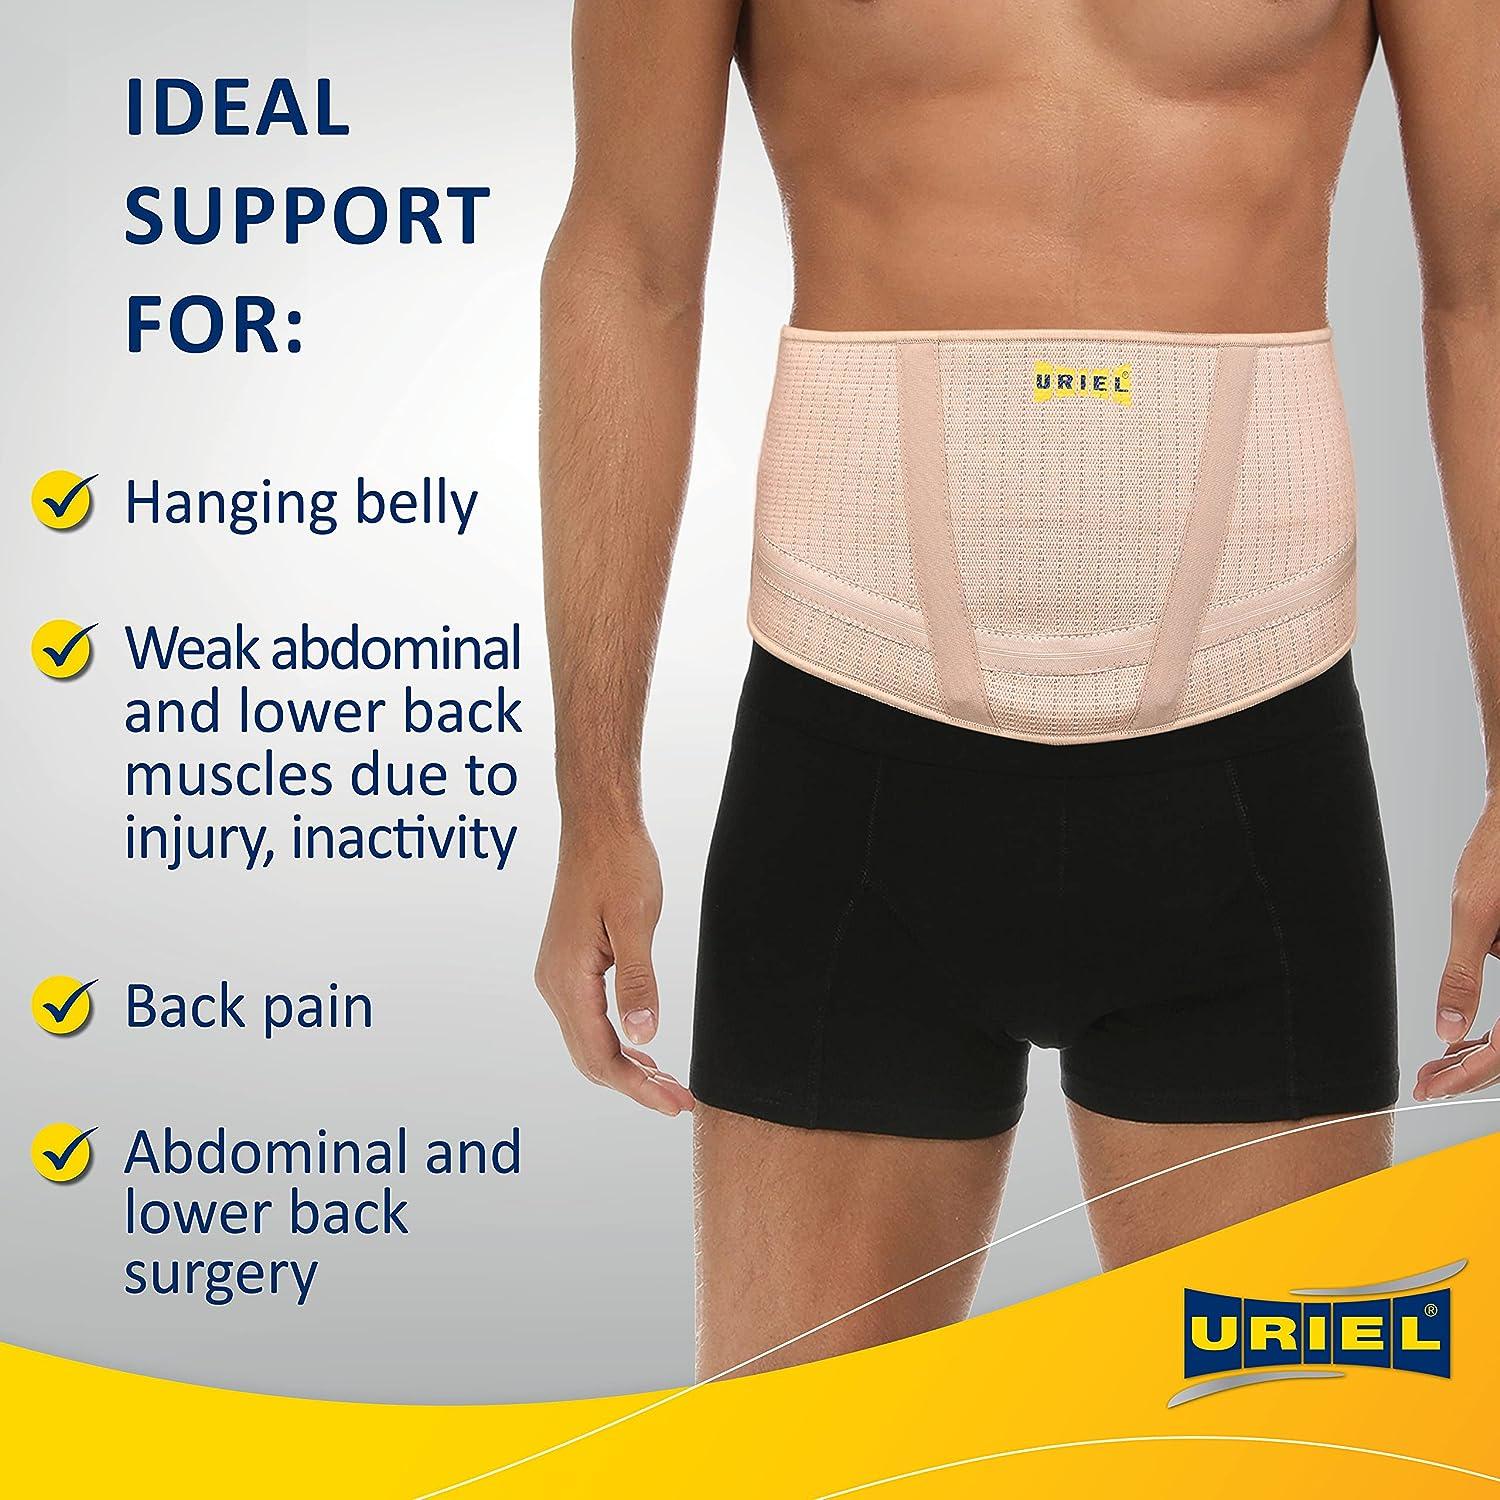 URIEL Abdominal Belt for Hanging Belly, Weak Abdominal and Lower